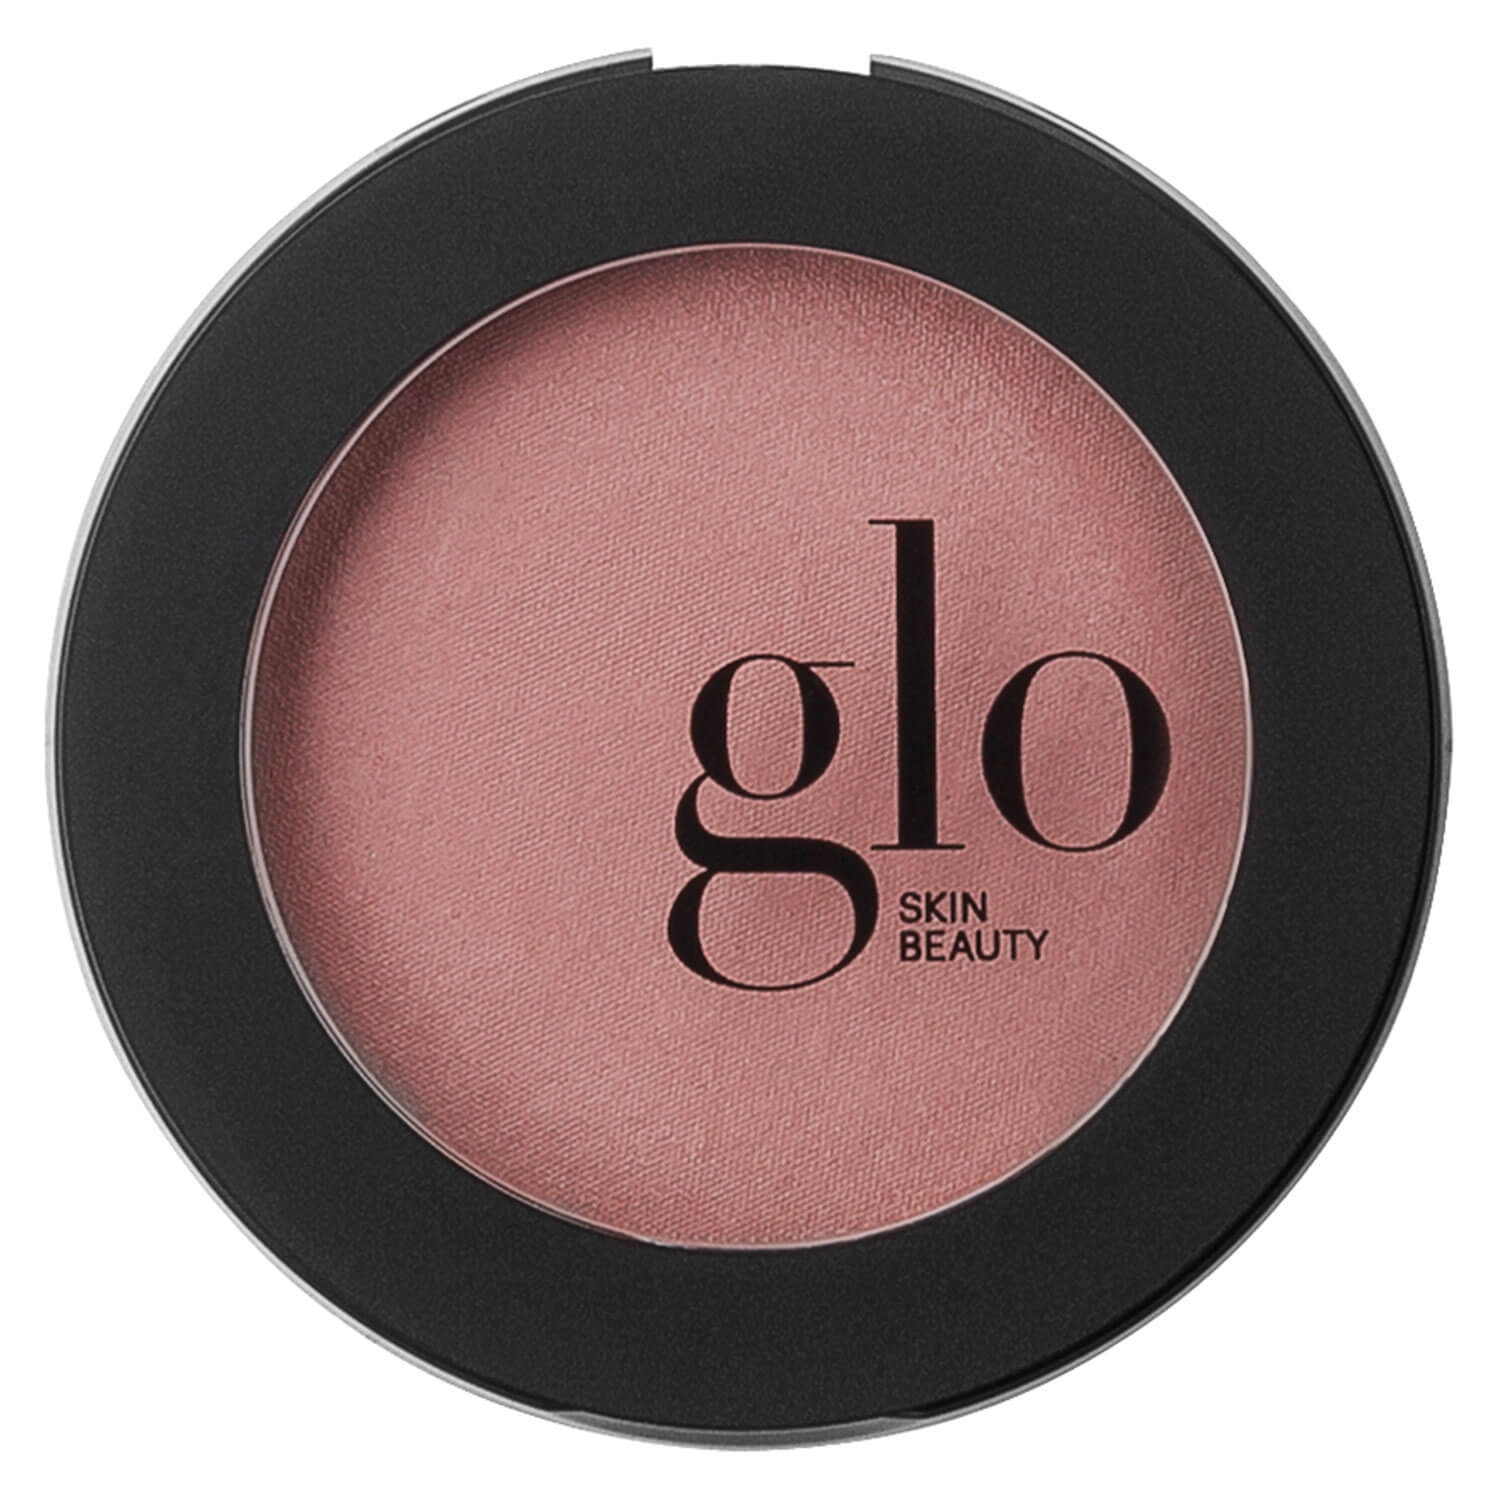 Produktbild von Glo Skin Beauty Blush - Blush Sheer Petal